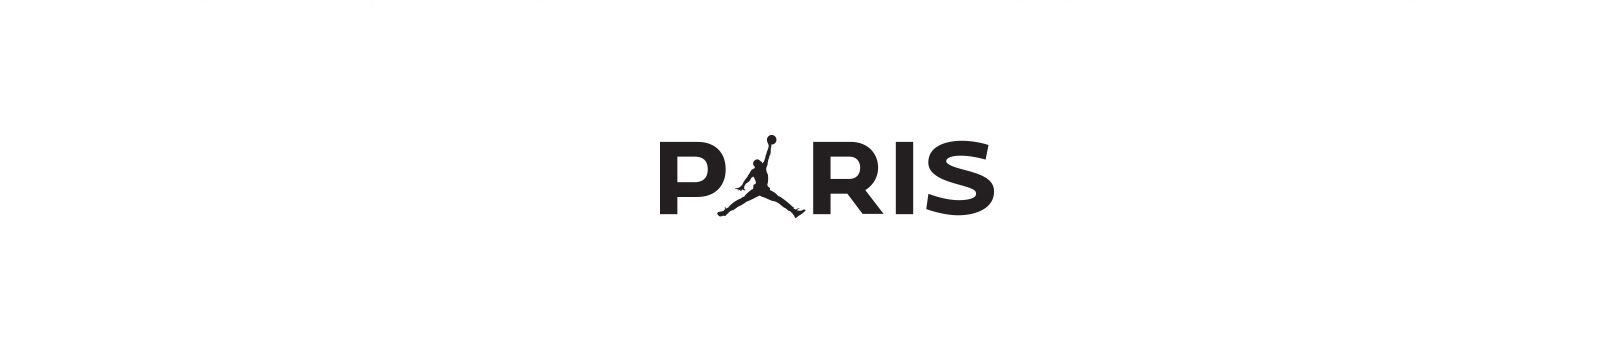 paris x jordan logo